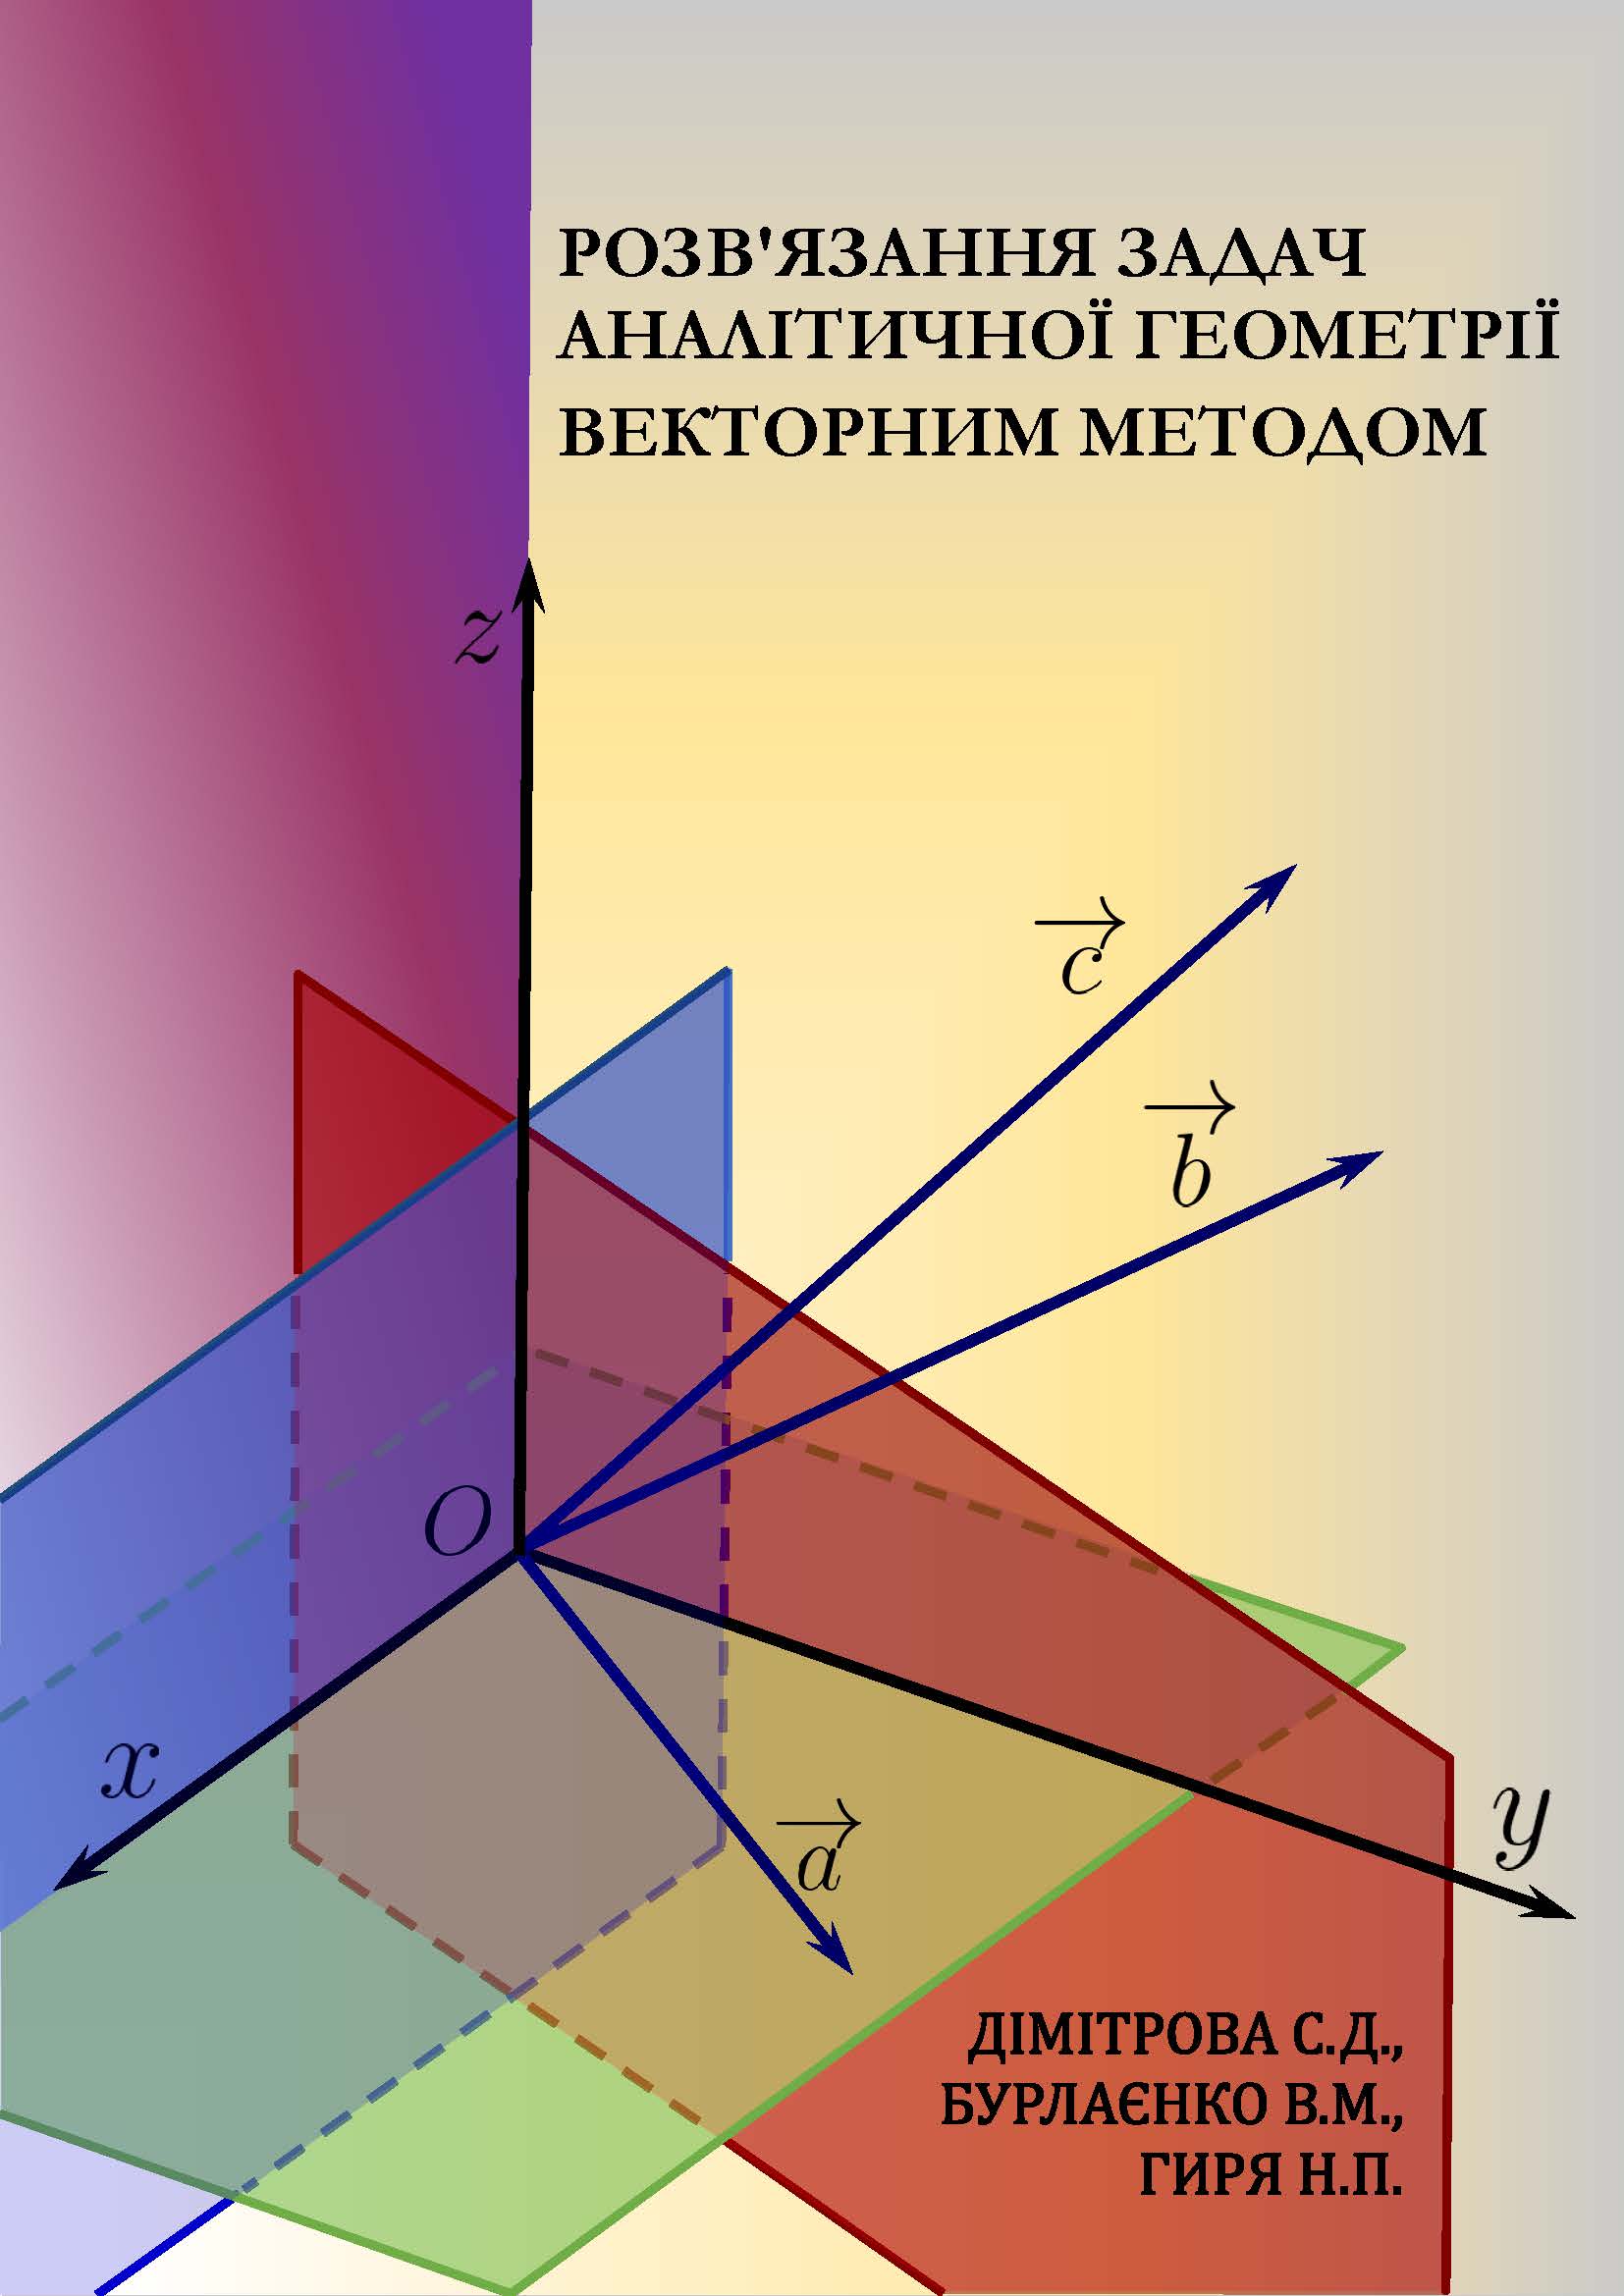 1p-Metodichka-Dimitrova-Burlayenko-Gyria